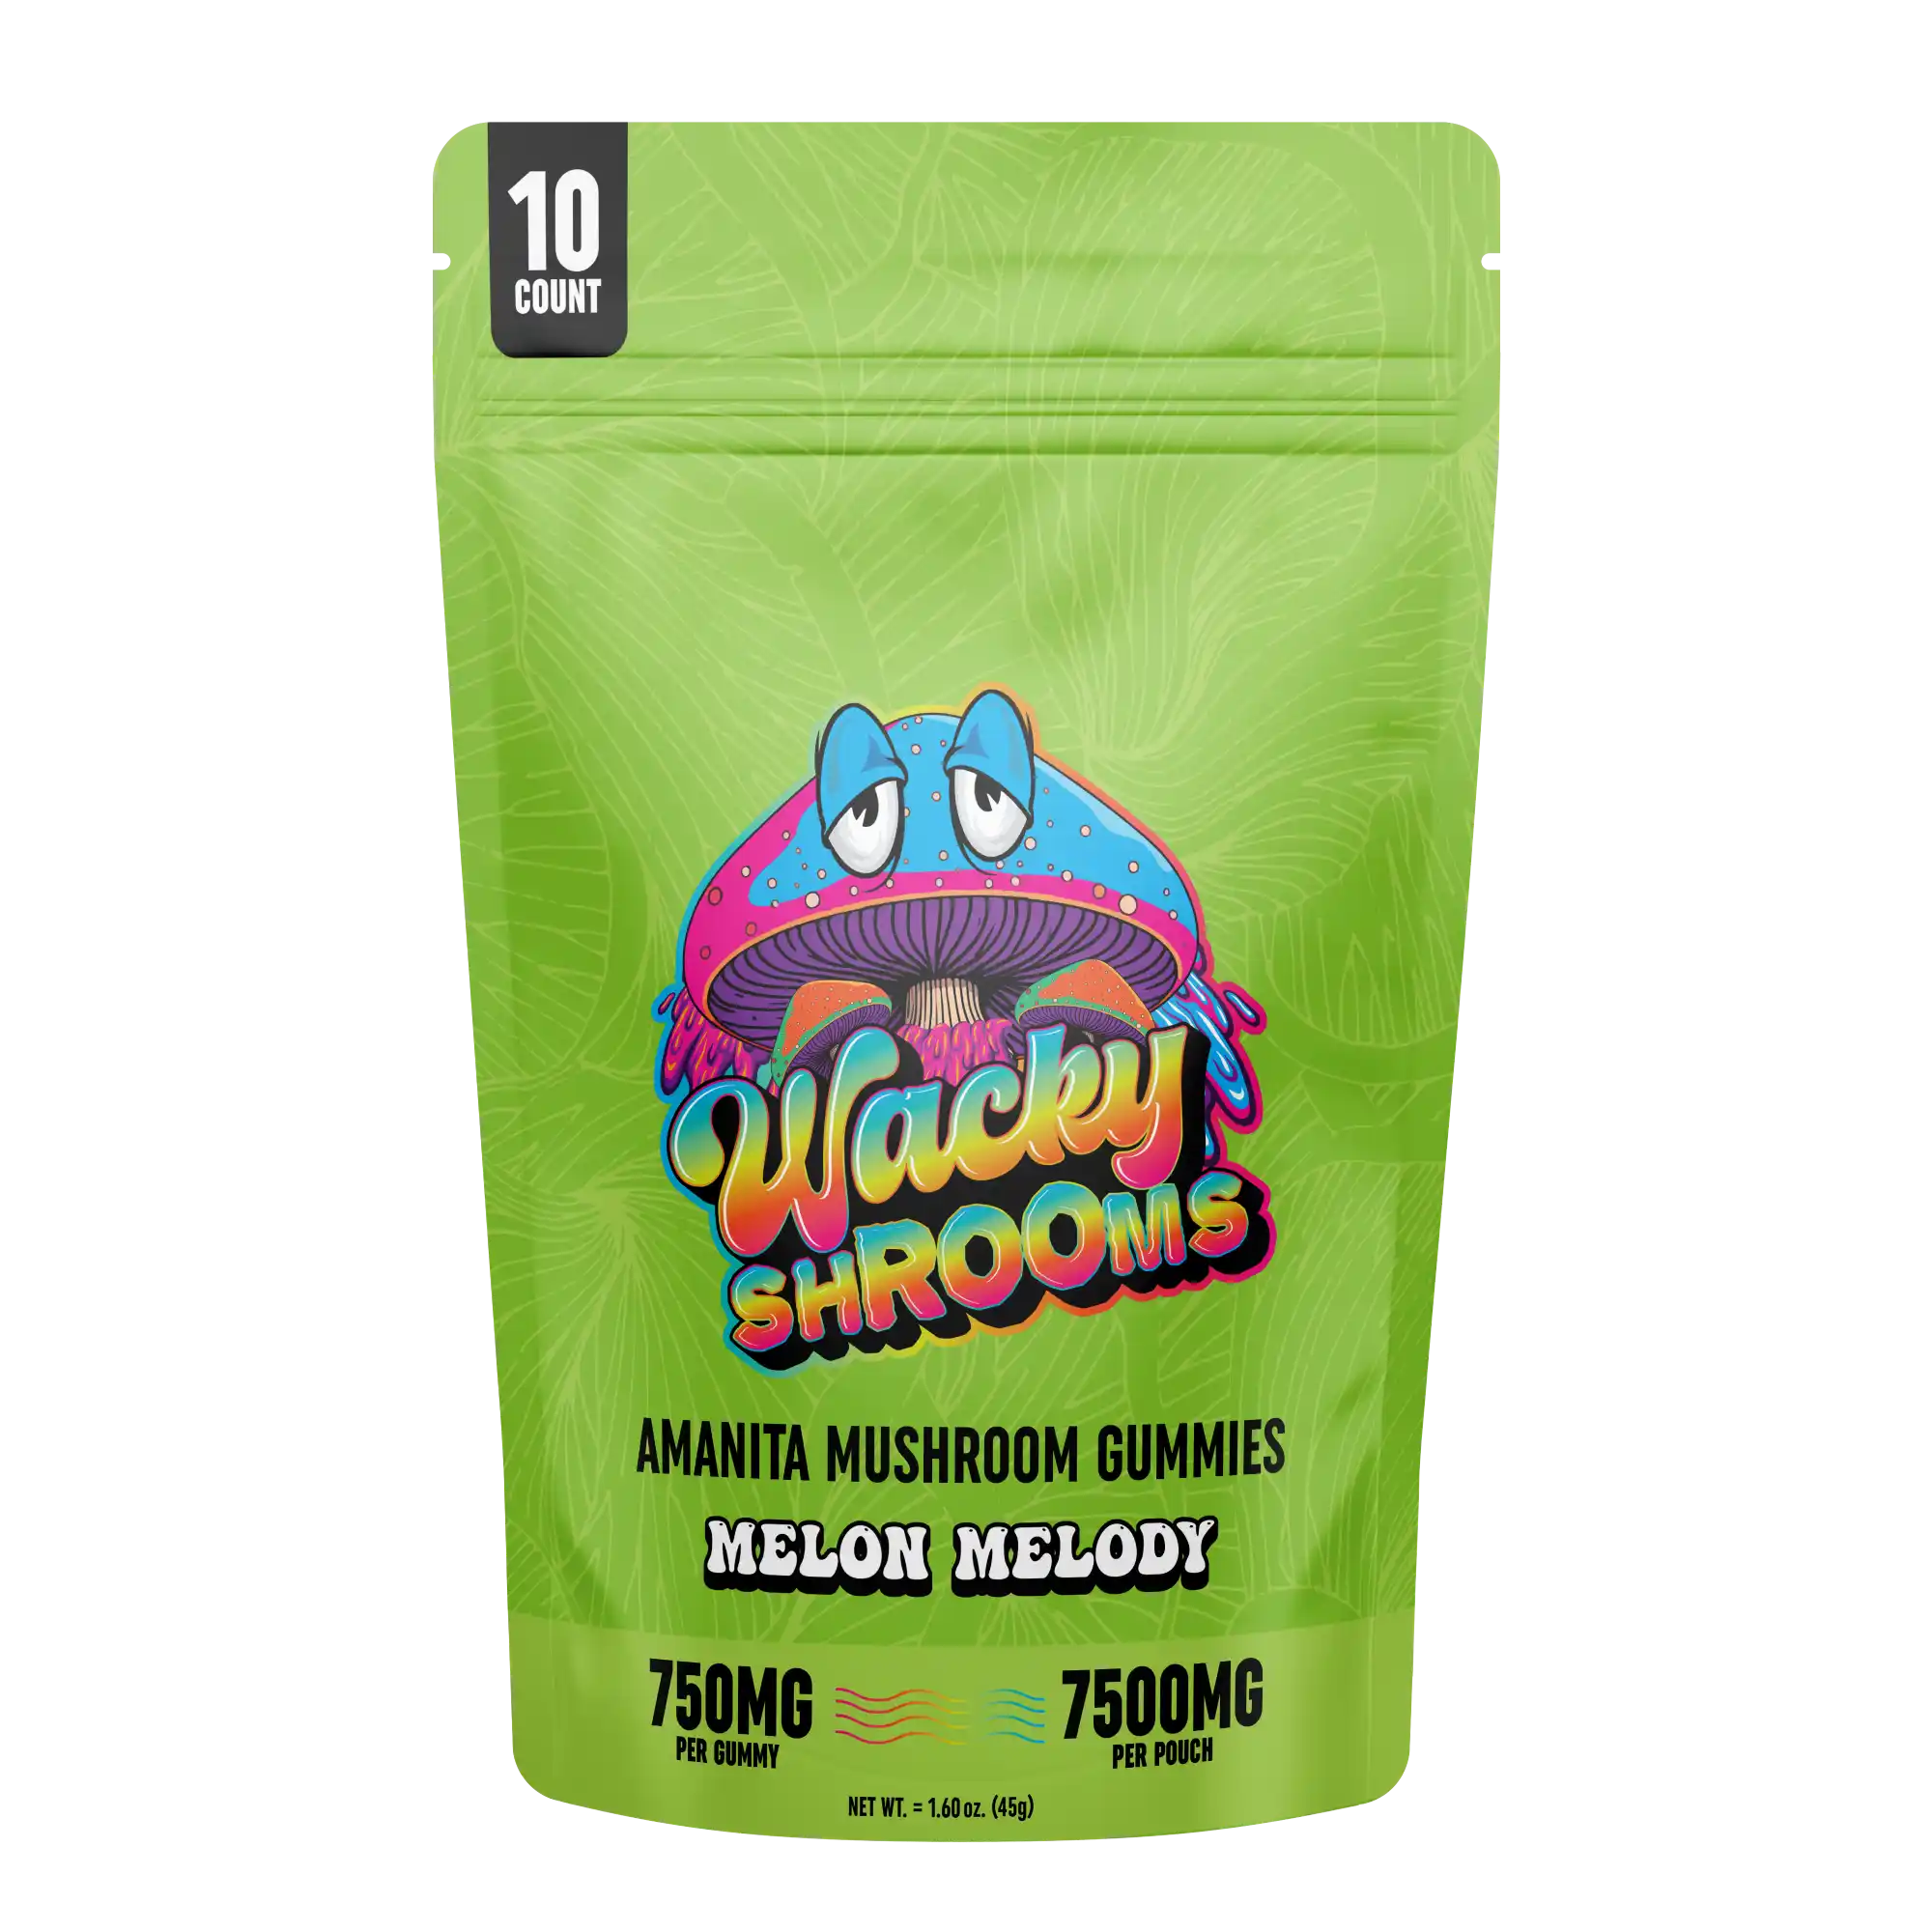 Wacky Shrooms: Melon Melody Amanita Mushroom Gummies